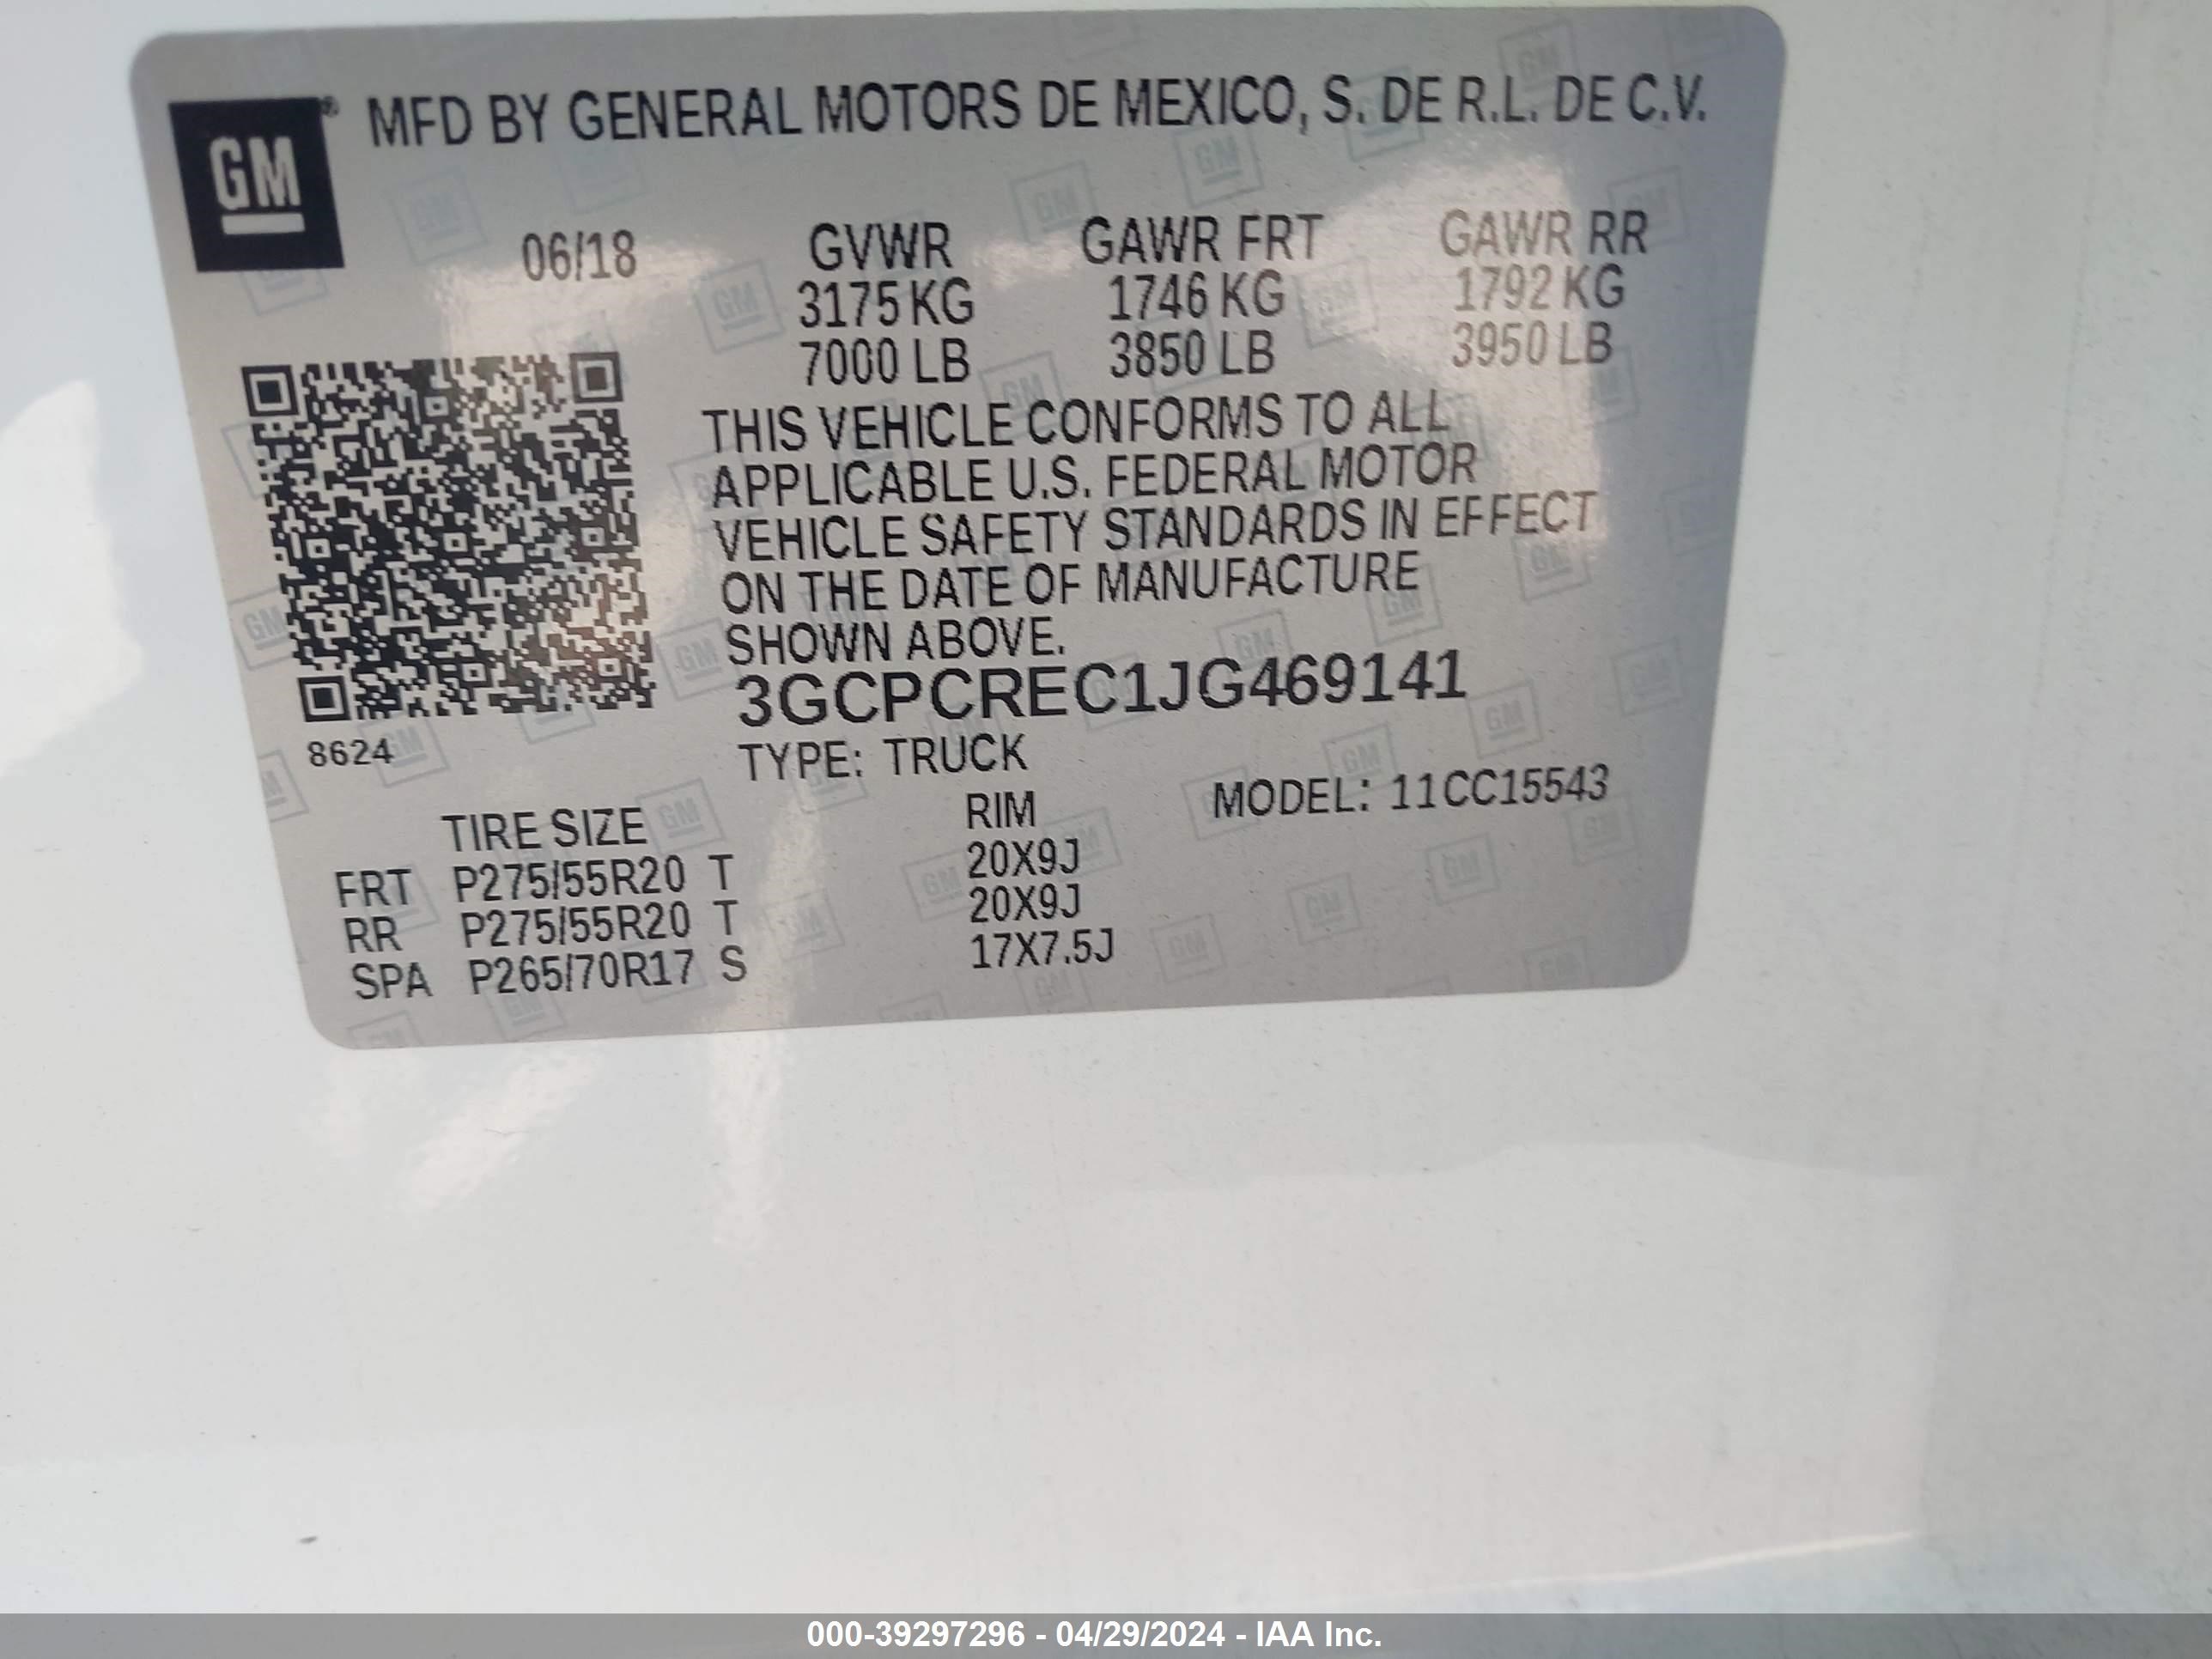 2018 Chevrolet Silverado 1500 1Lt vin: 3GCPCREC1JG469141